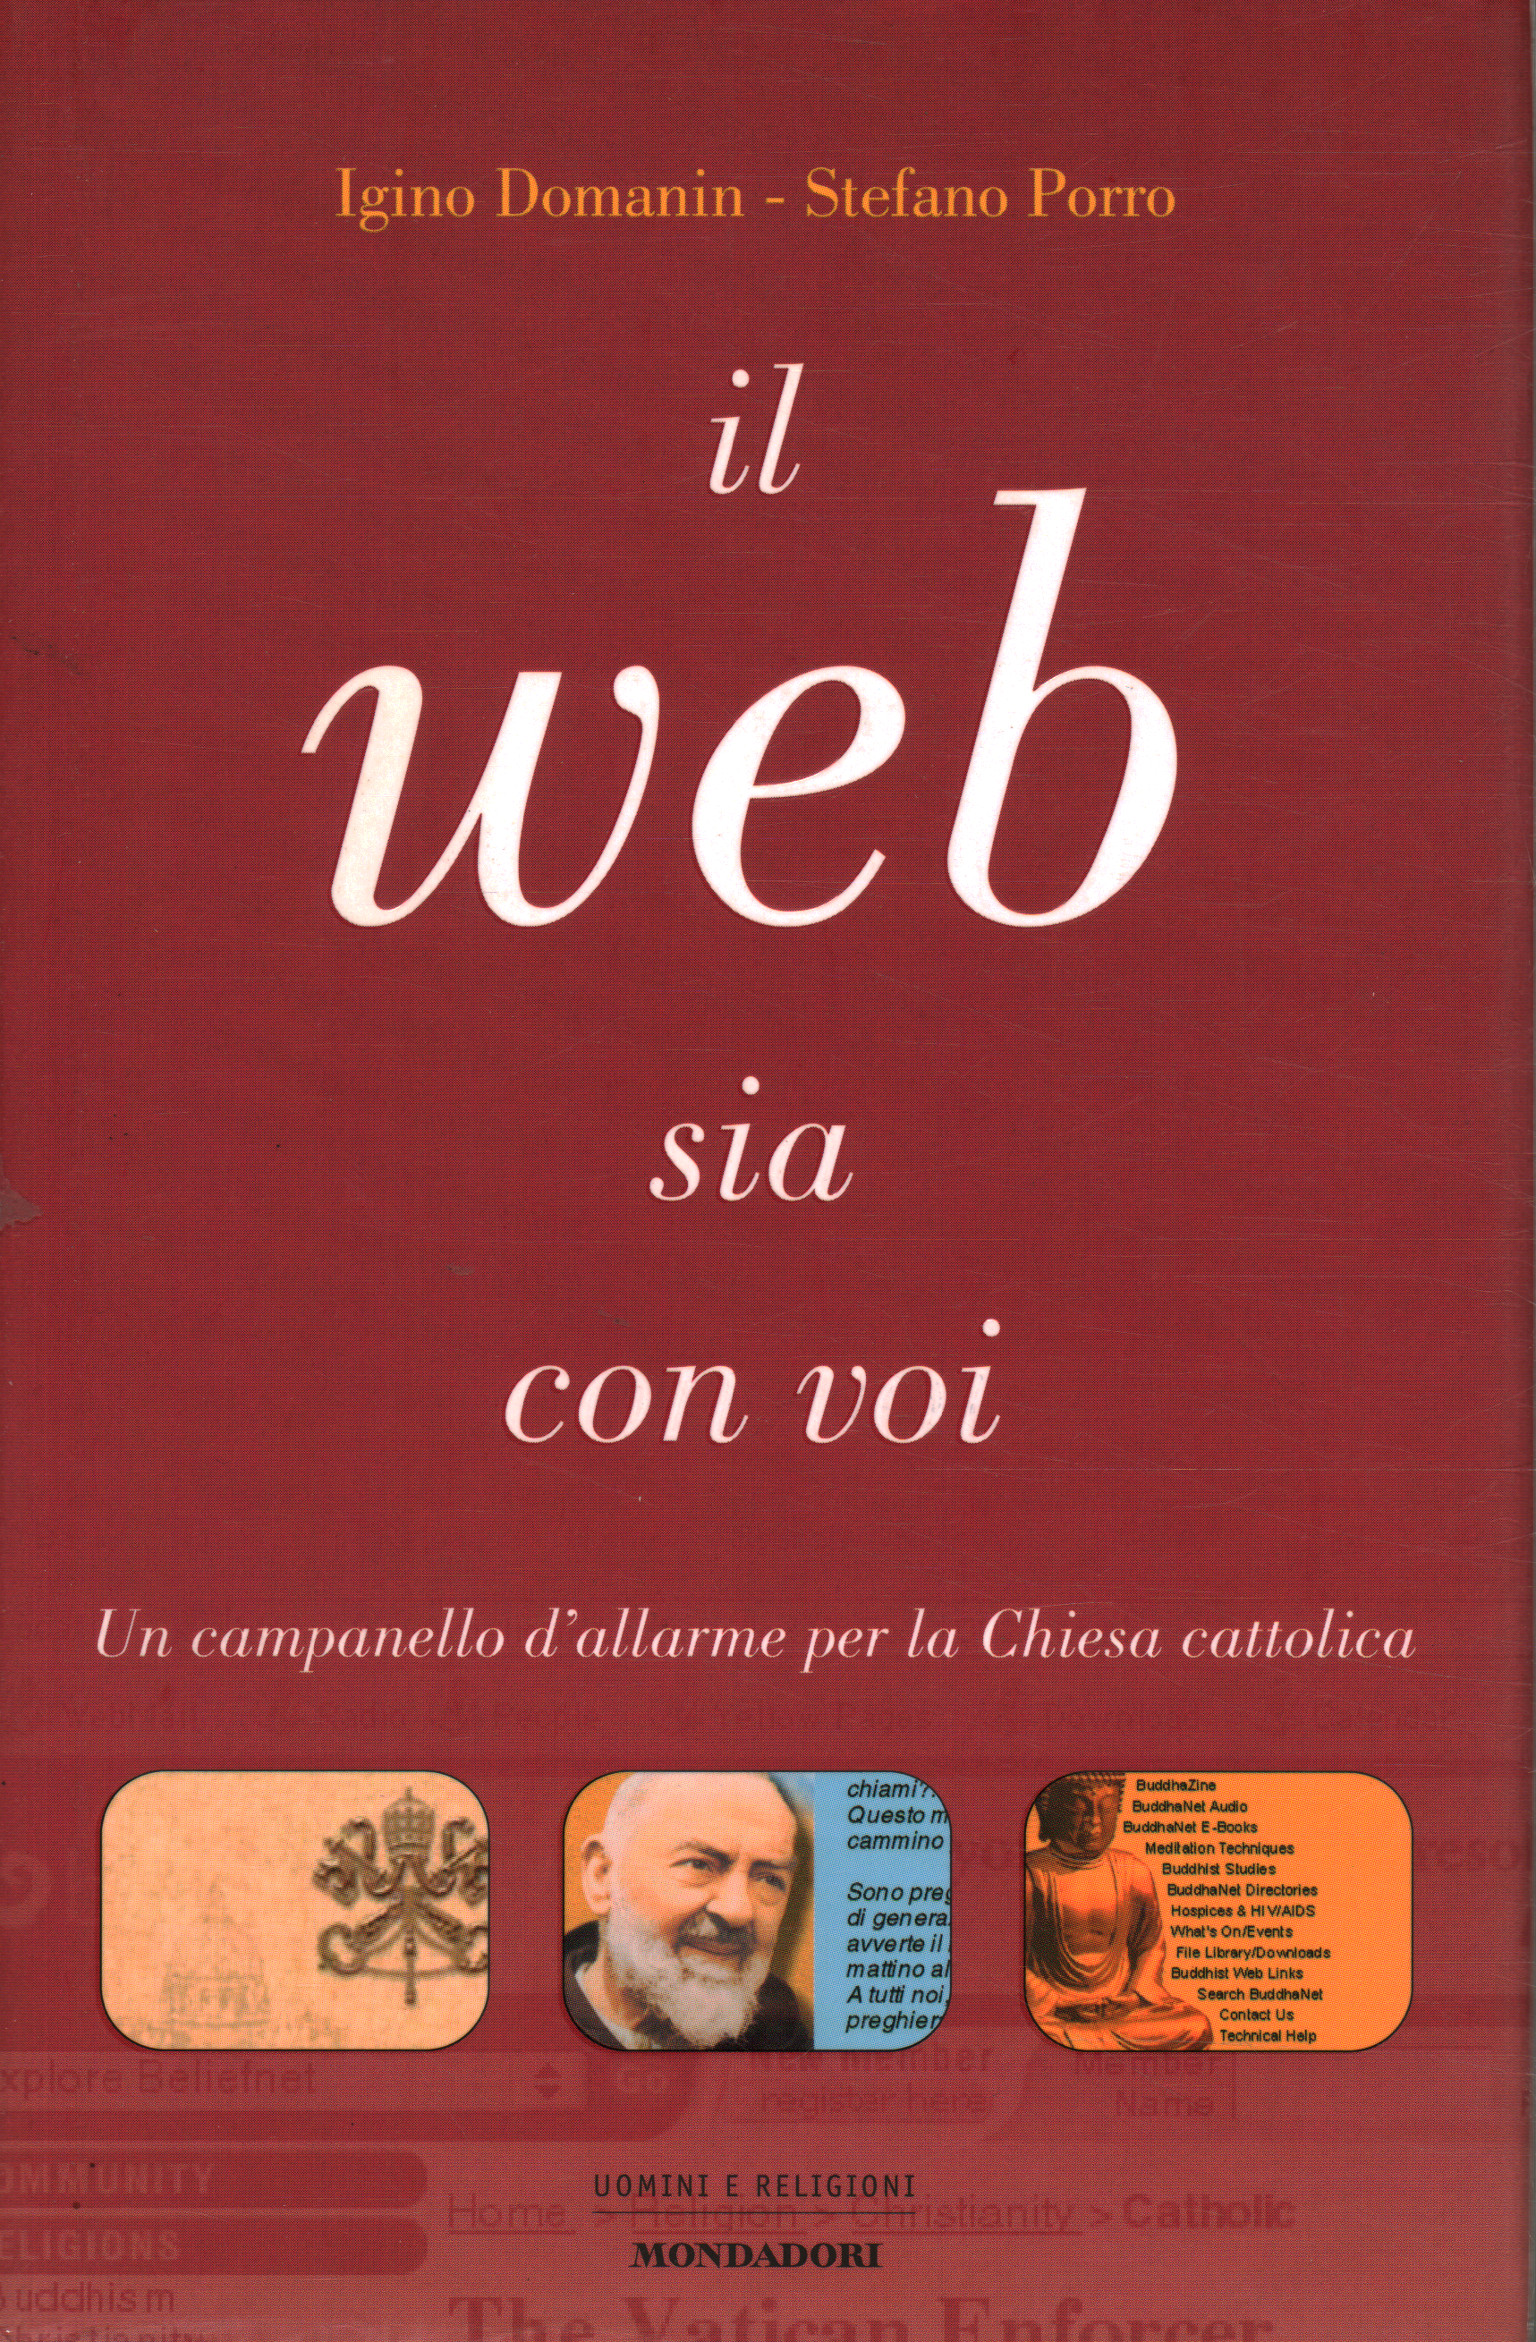 Das Web ist bei dir, Igino Domanin Stefano Porro